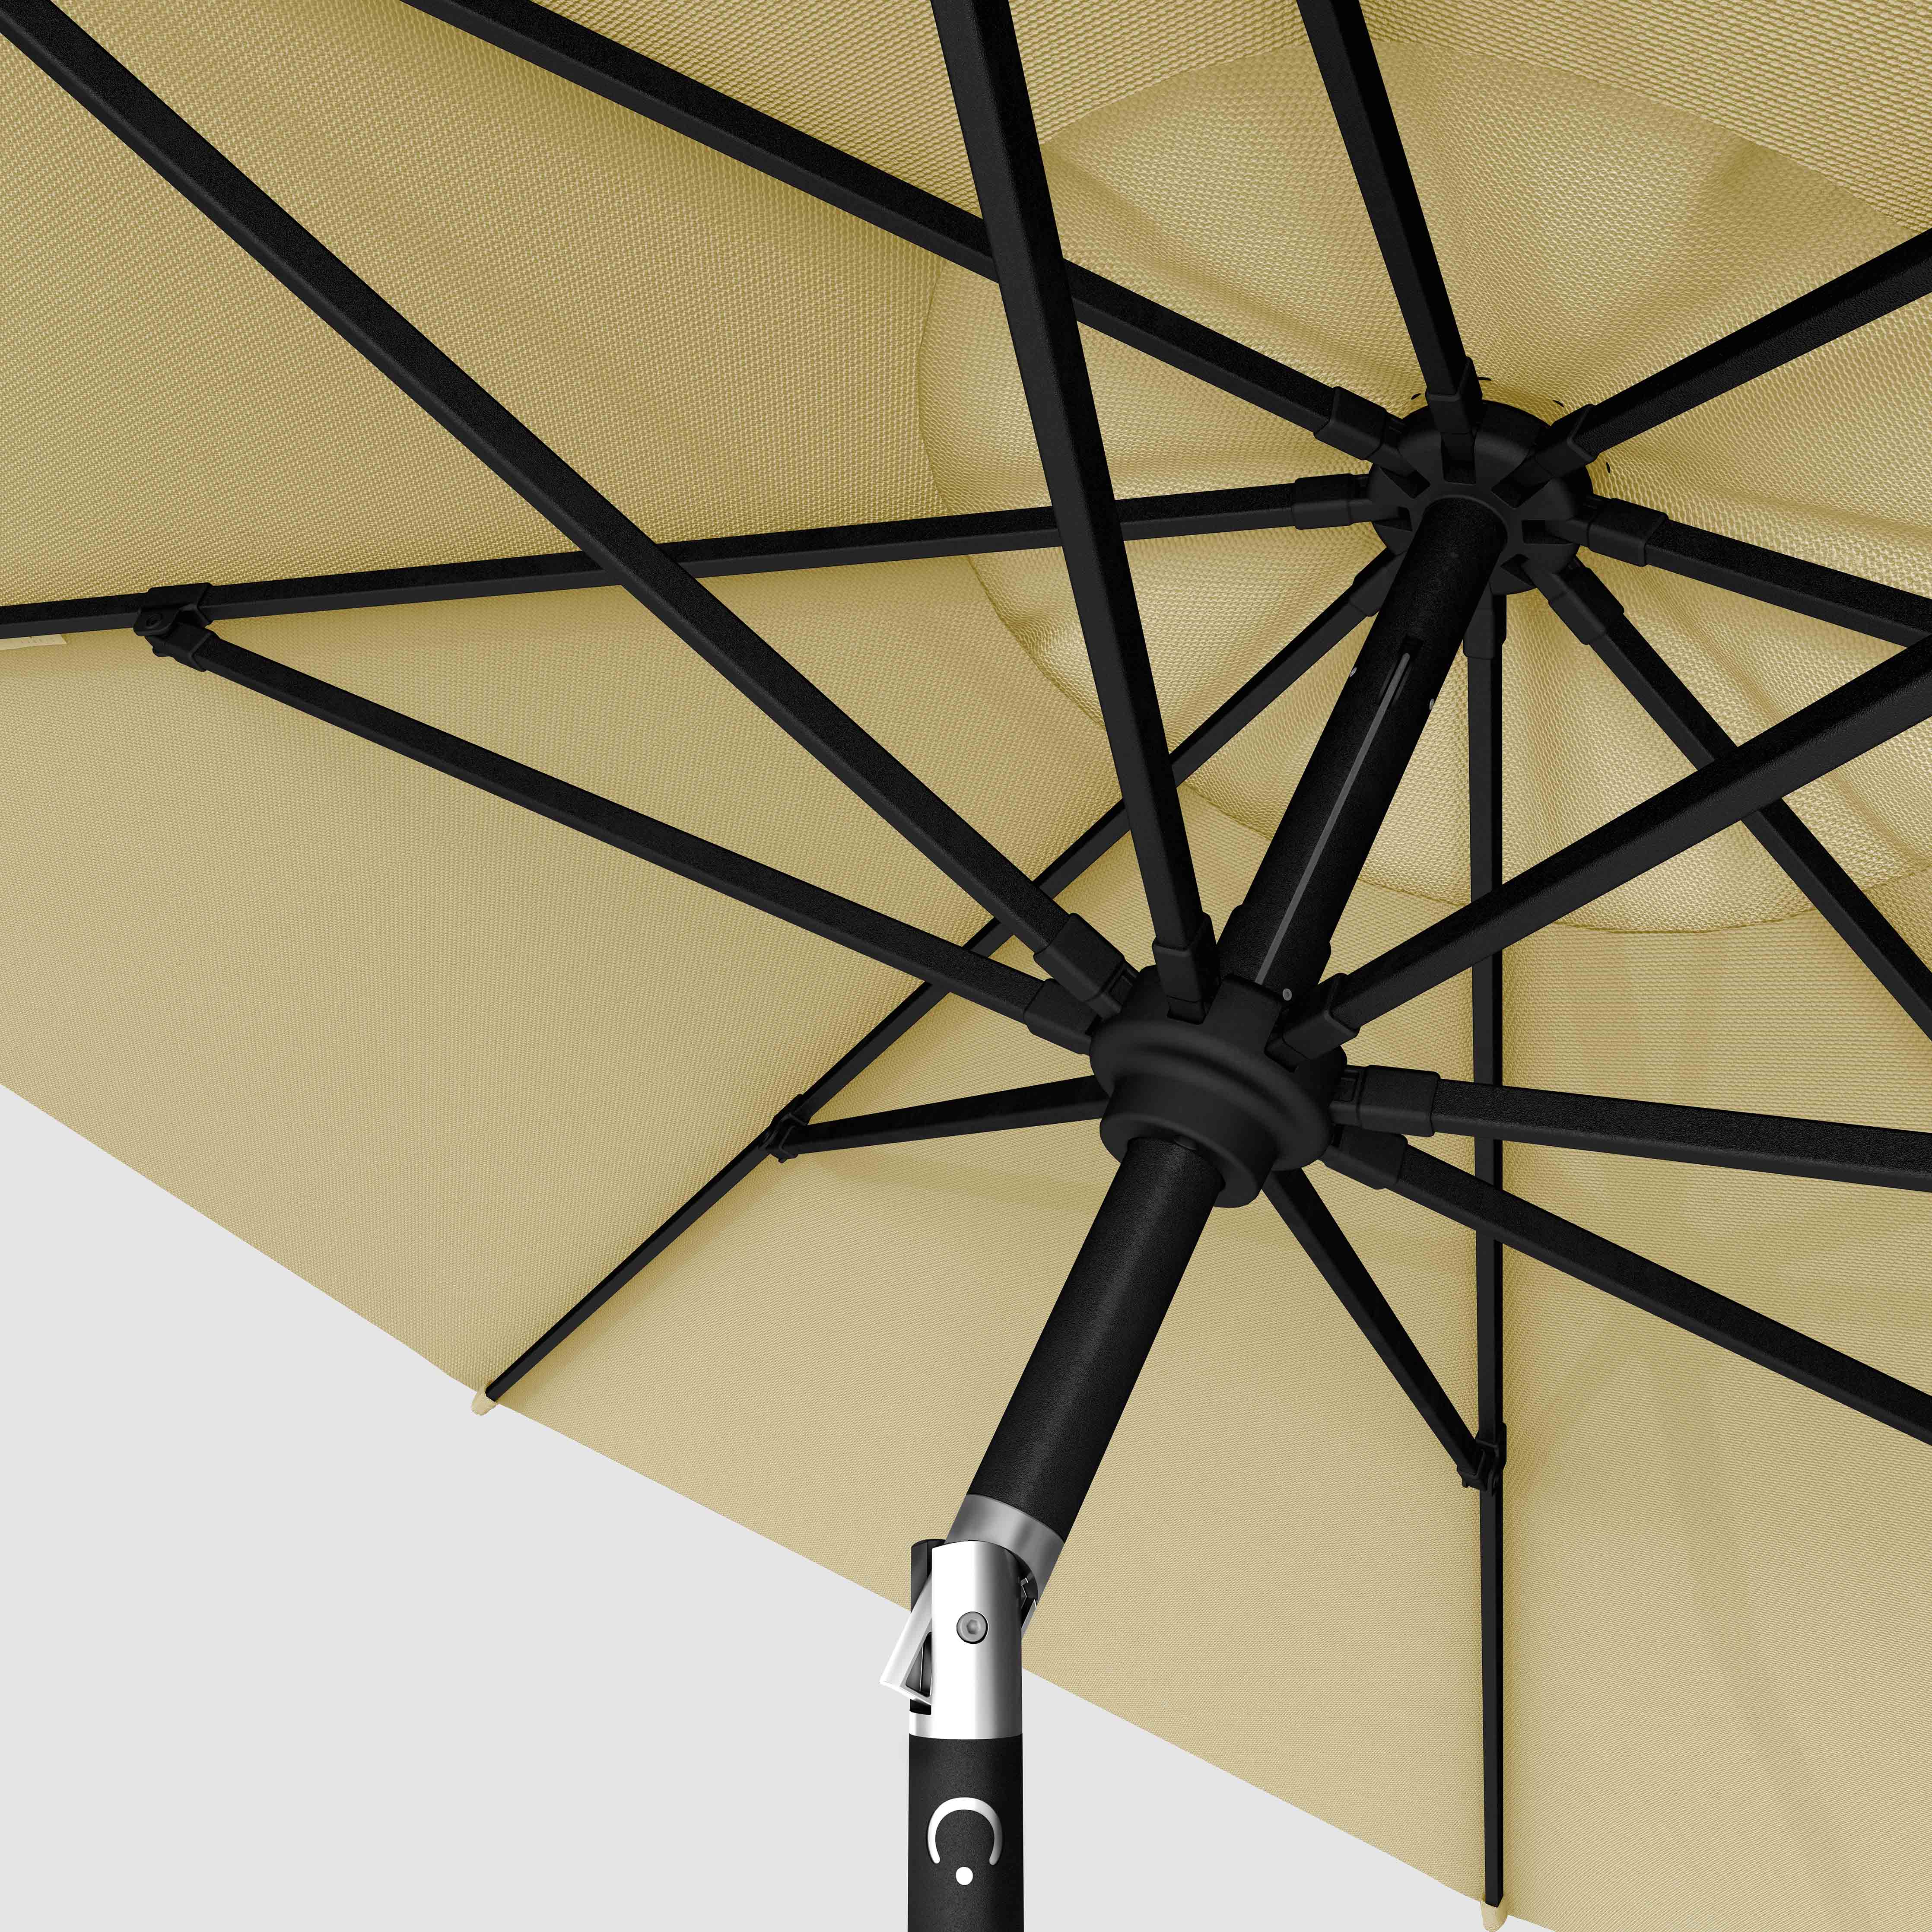  Patio Umbrella Replacement Cord